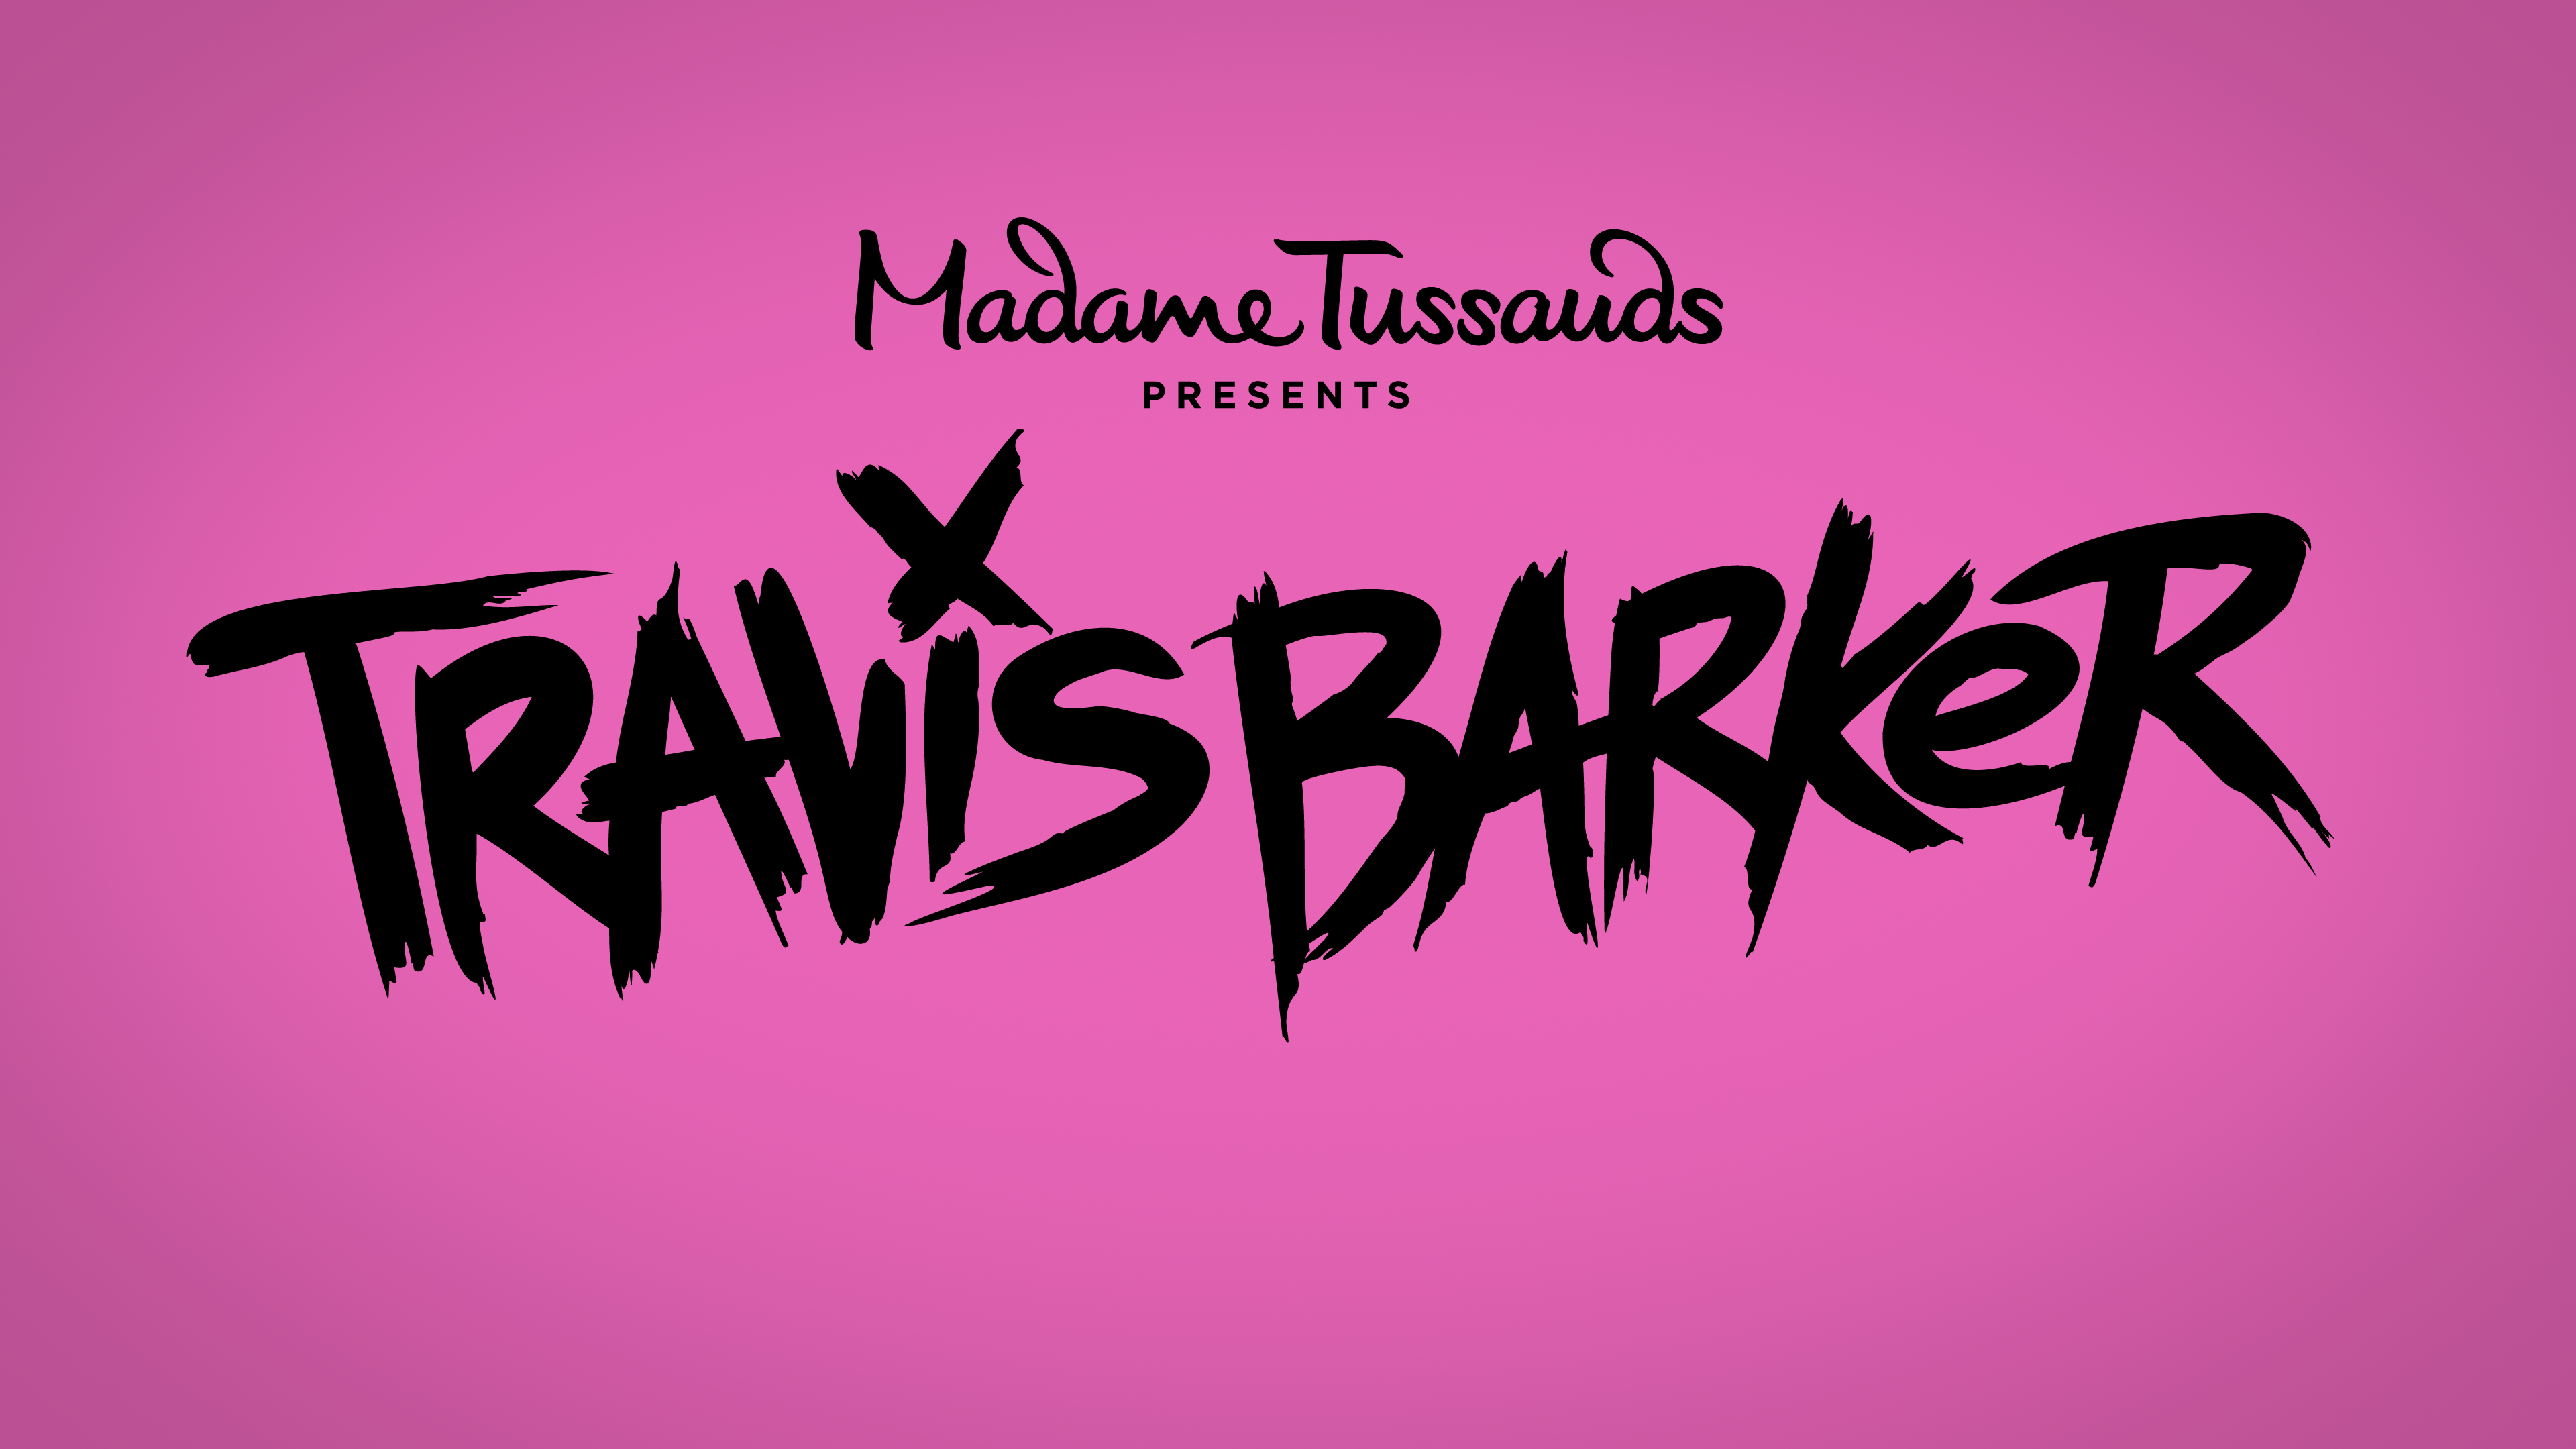 MTS Travis Barker Logo Static Final